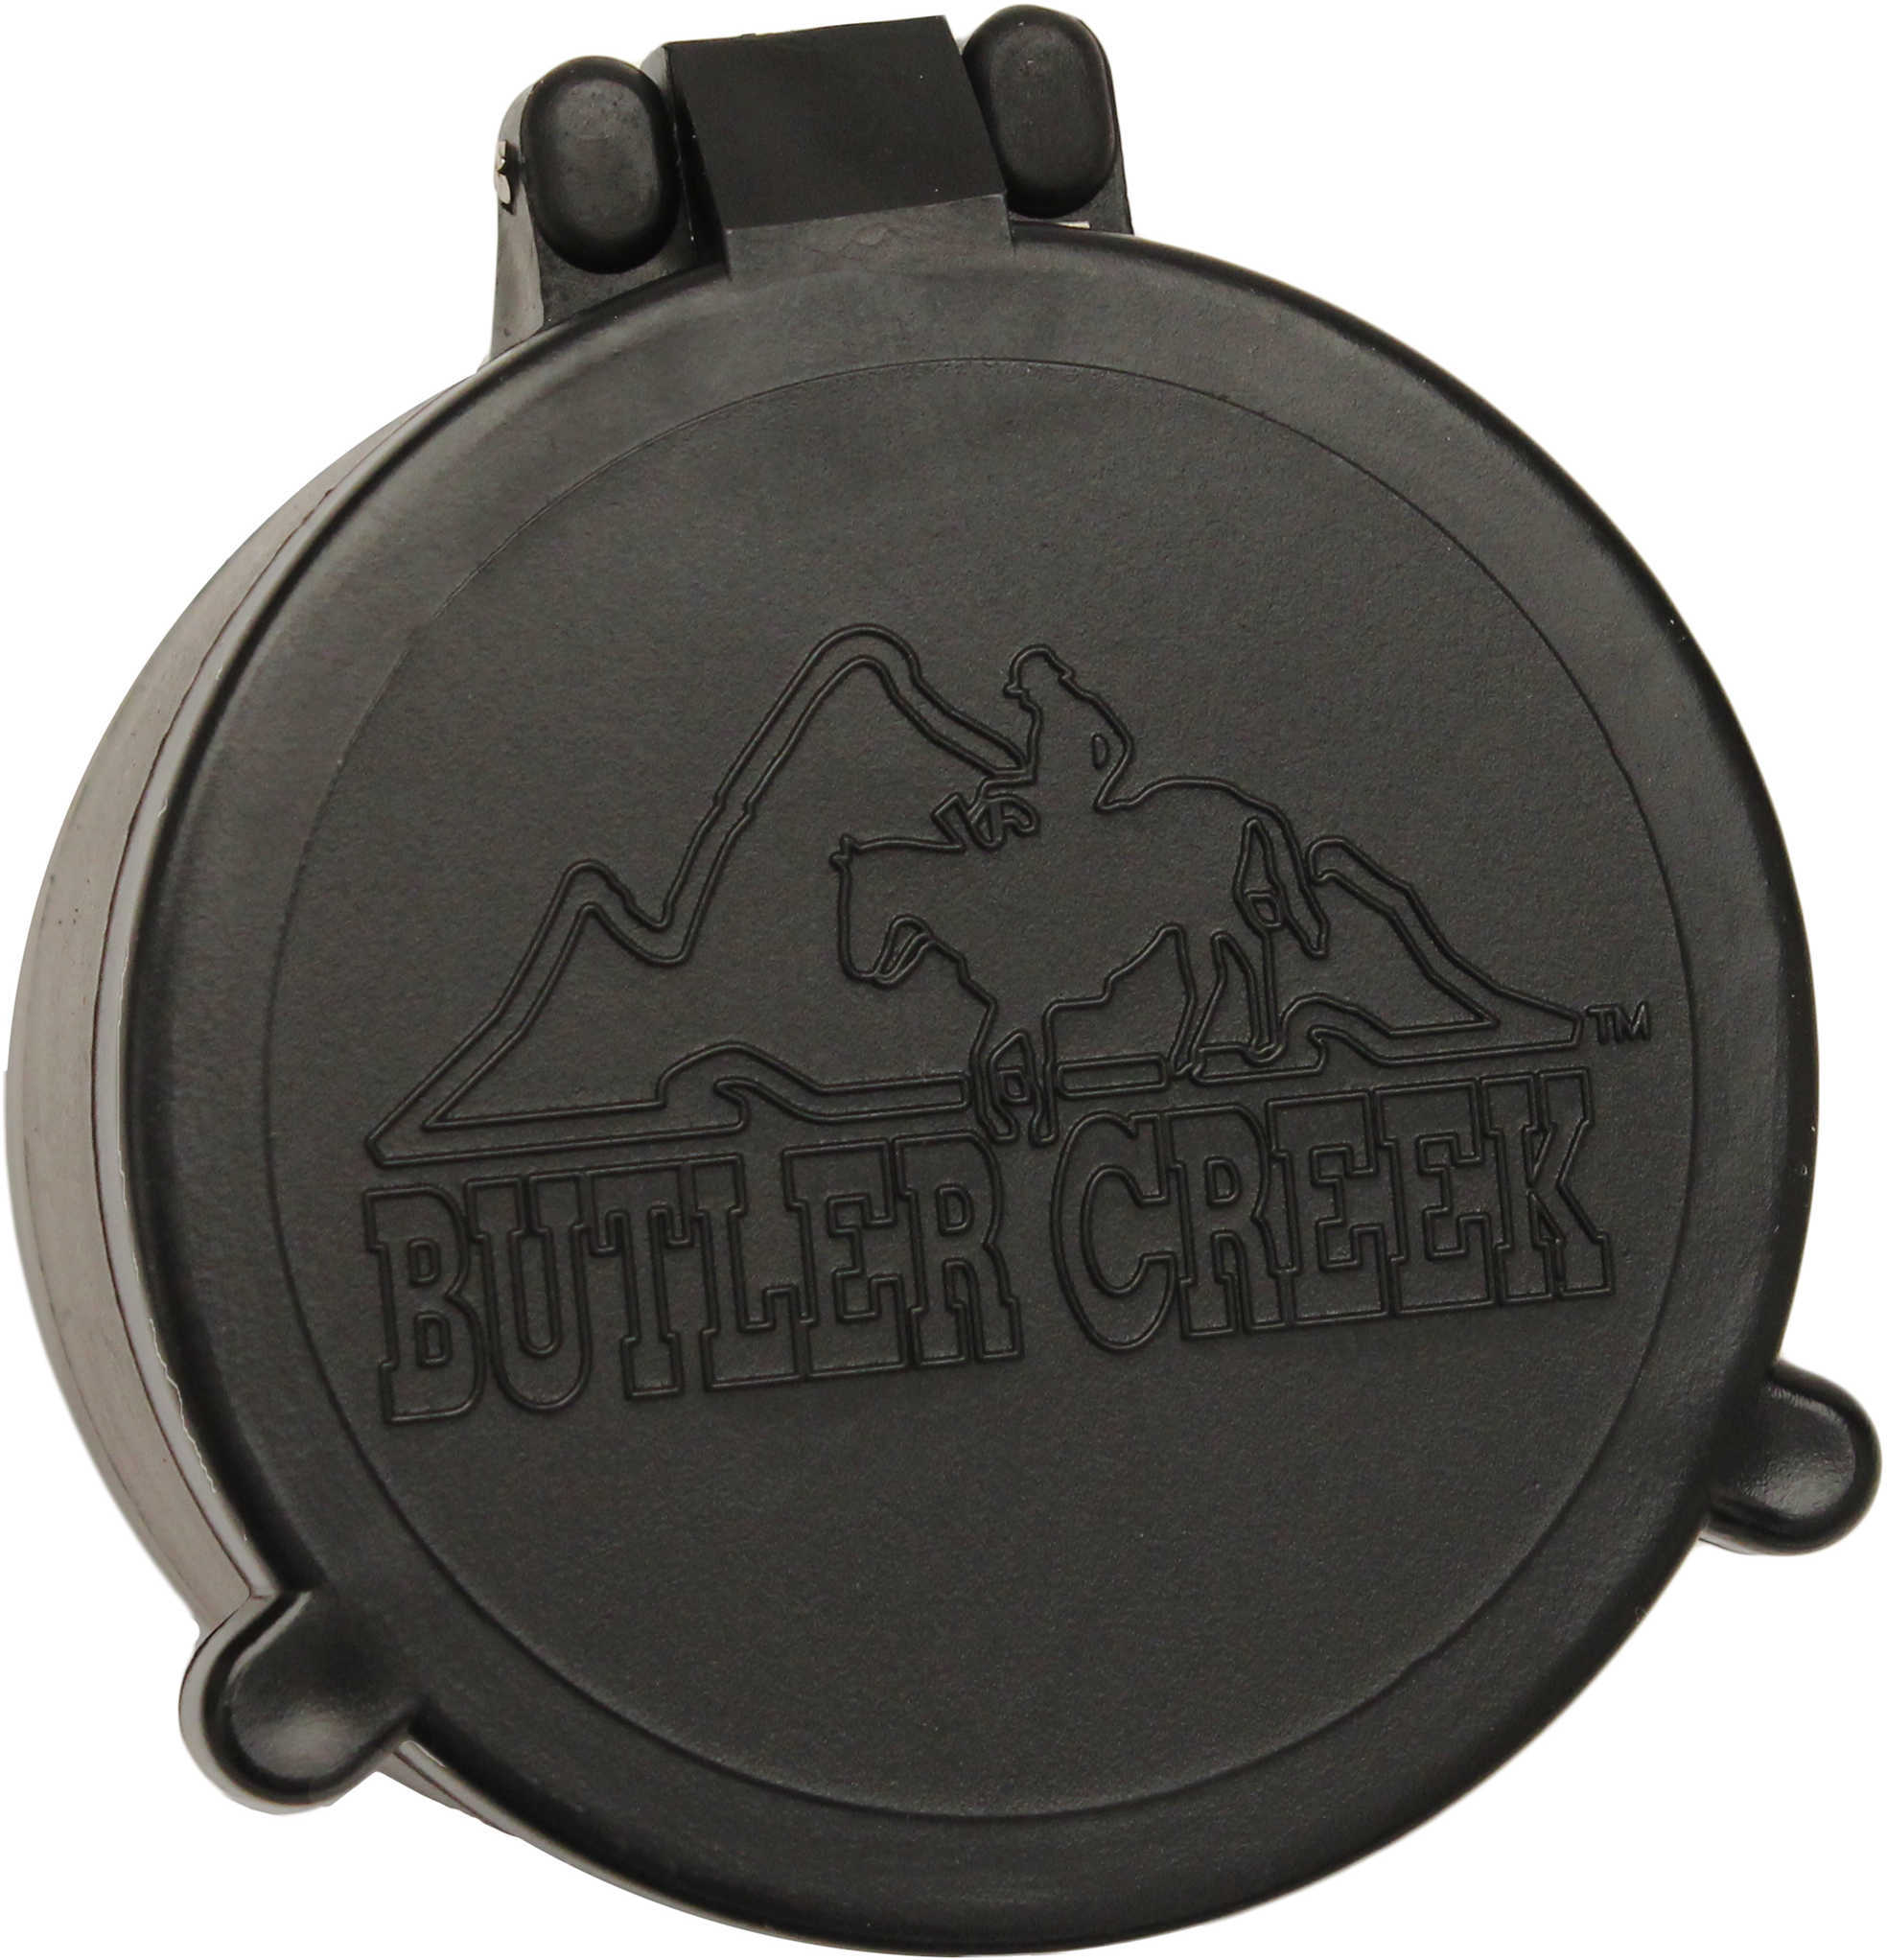 Butler Creek Flip-Open Scope Cover Fits 2.04" Objective Size 33 Black 30330